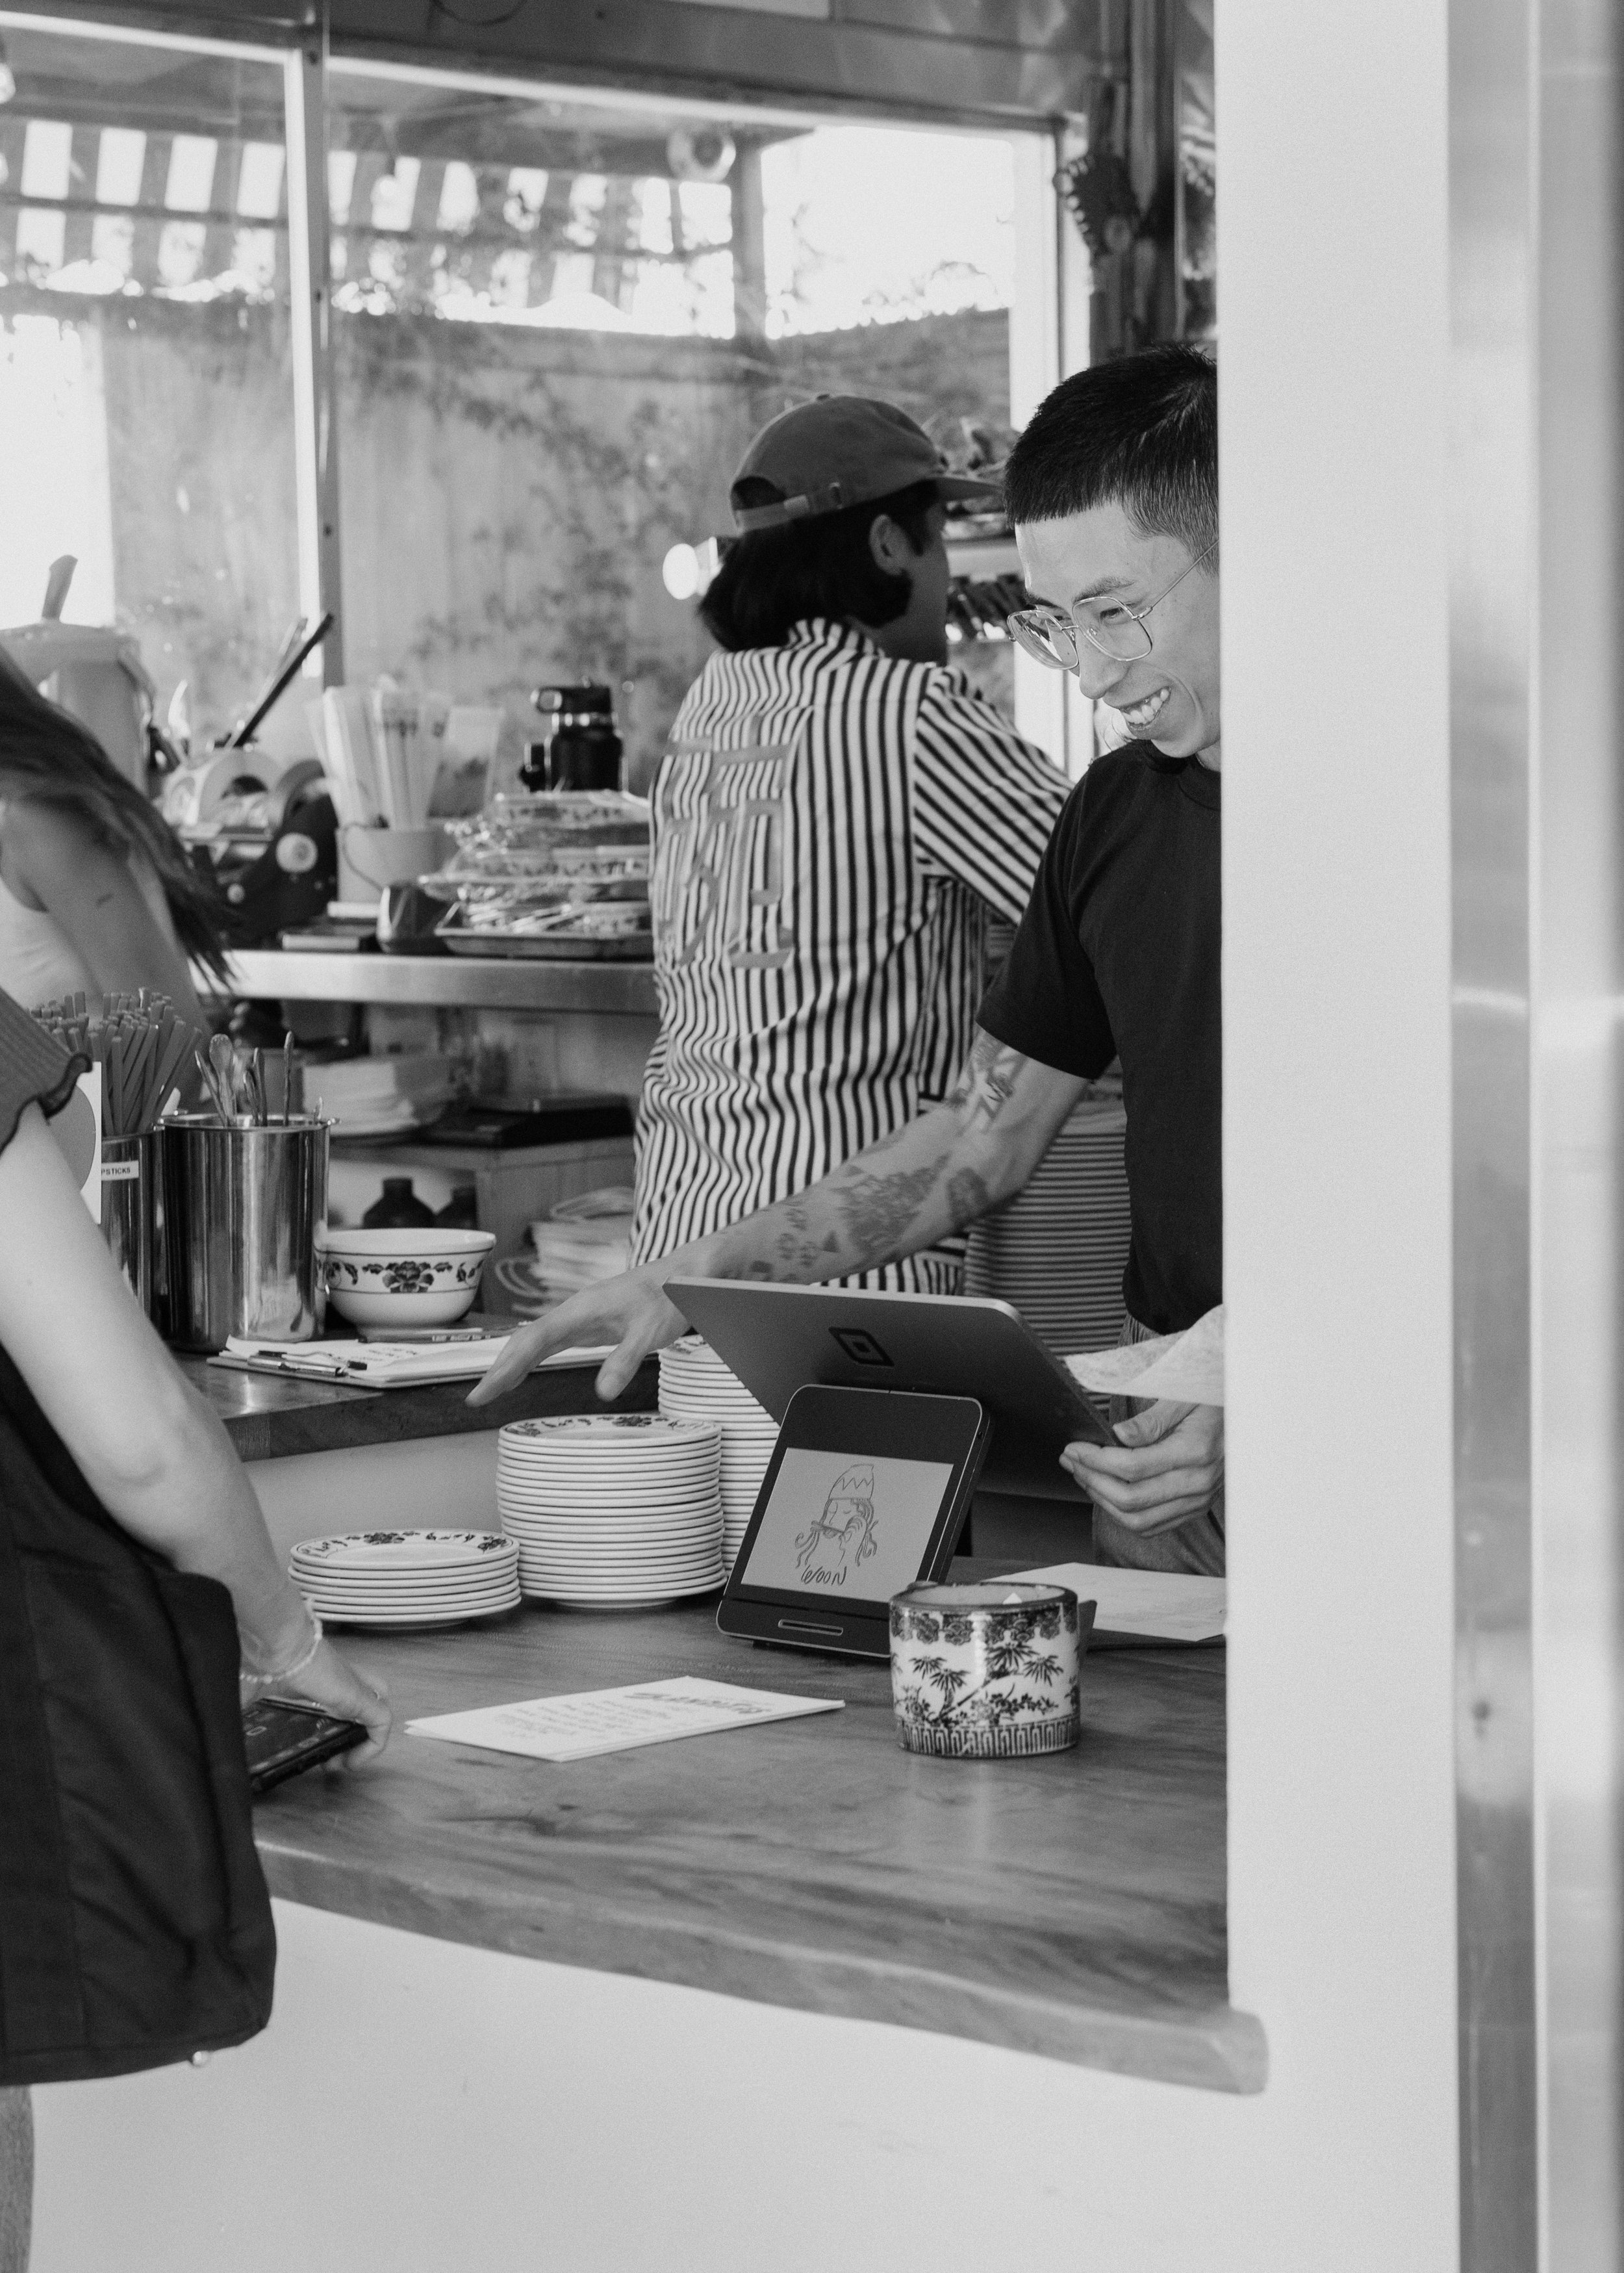 People working in a restaurant kitchen